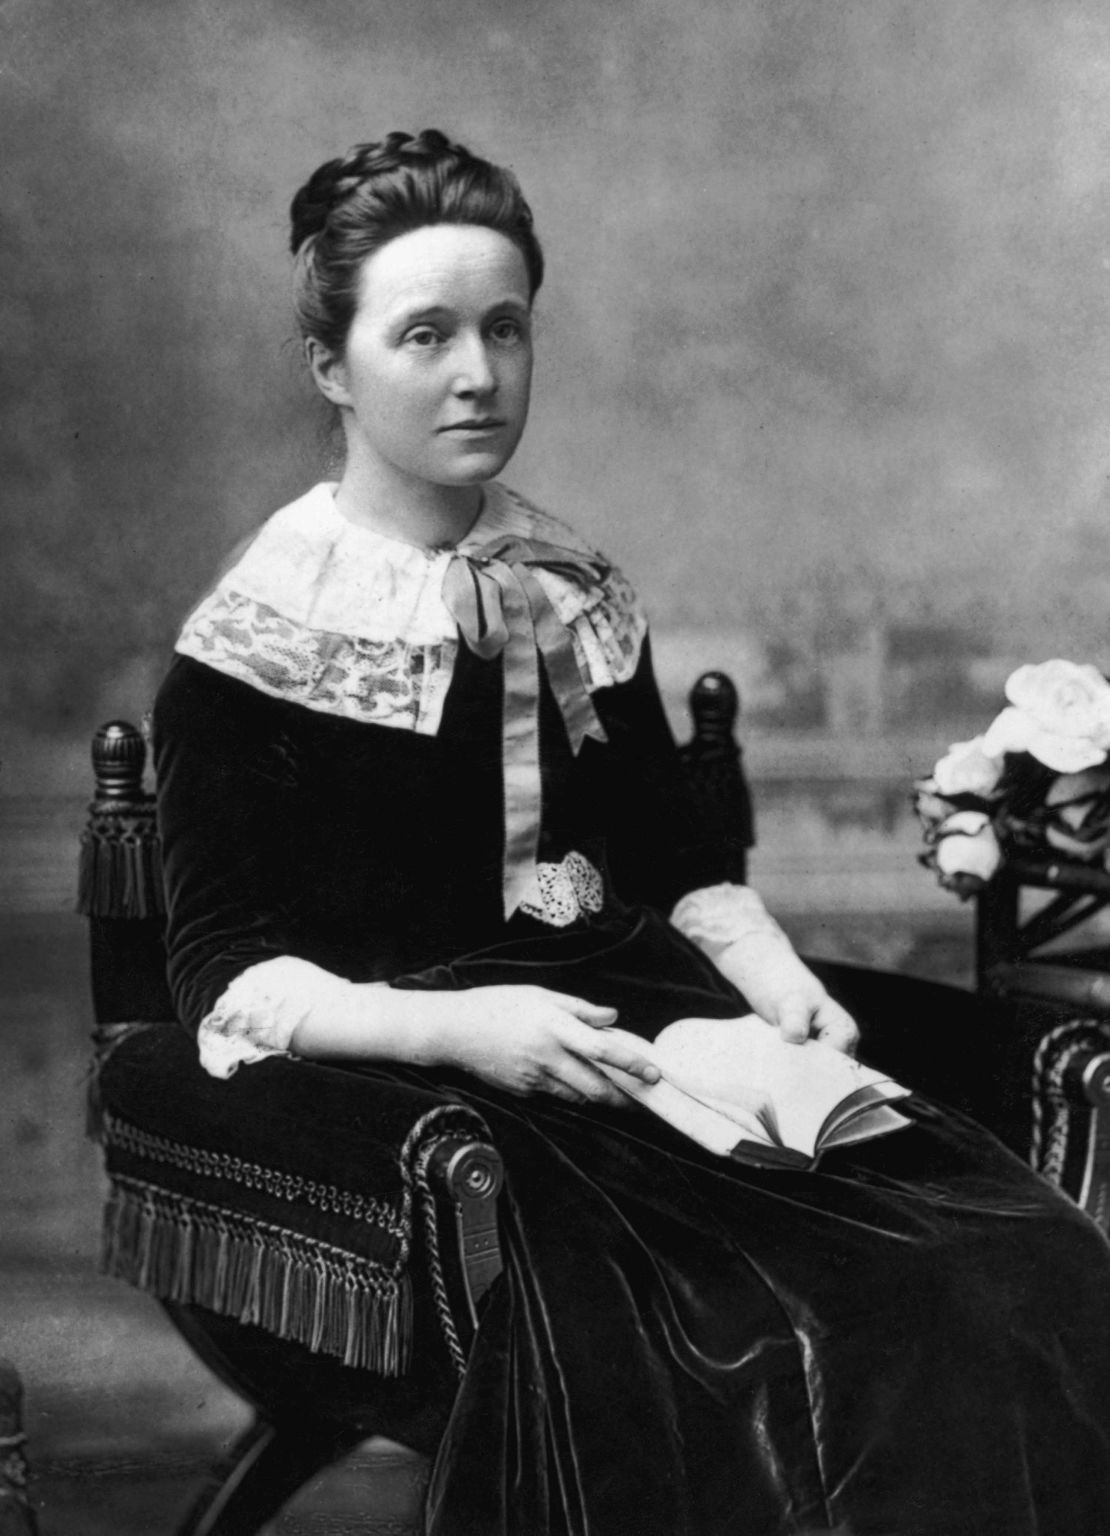 British feminist and suffragist Millicent Fawcett, who died in 1929.